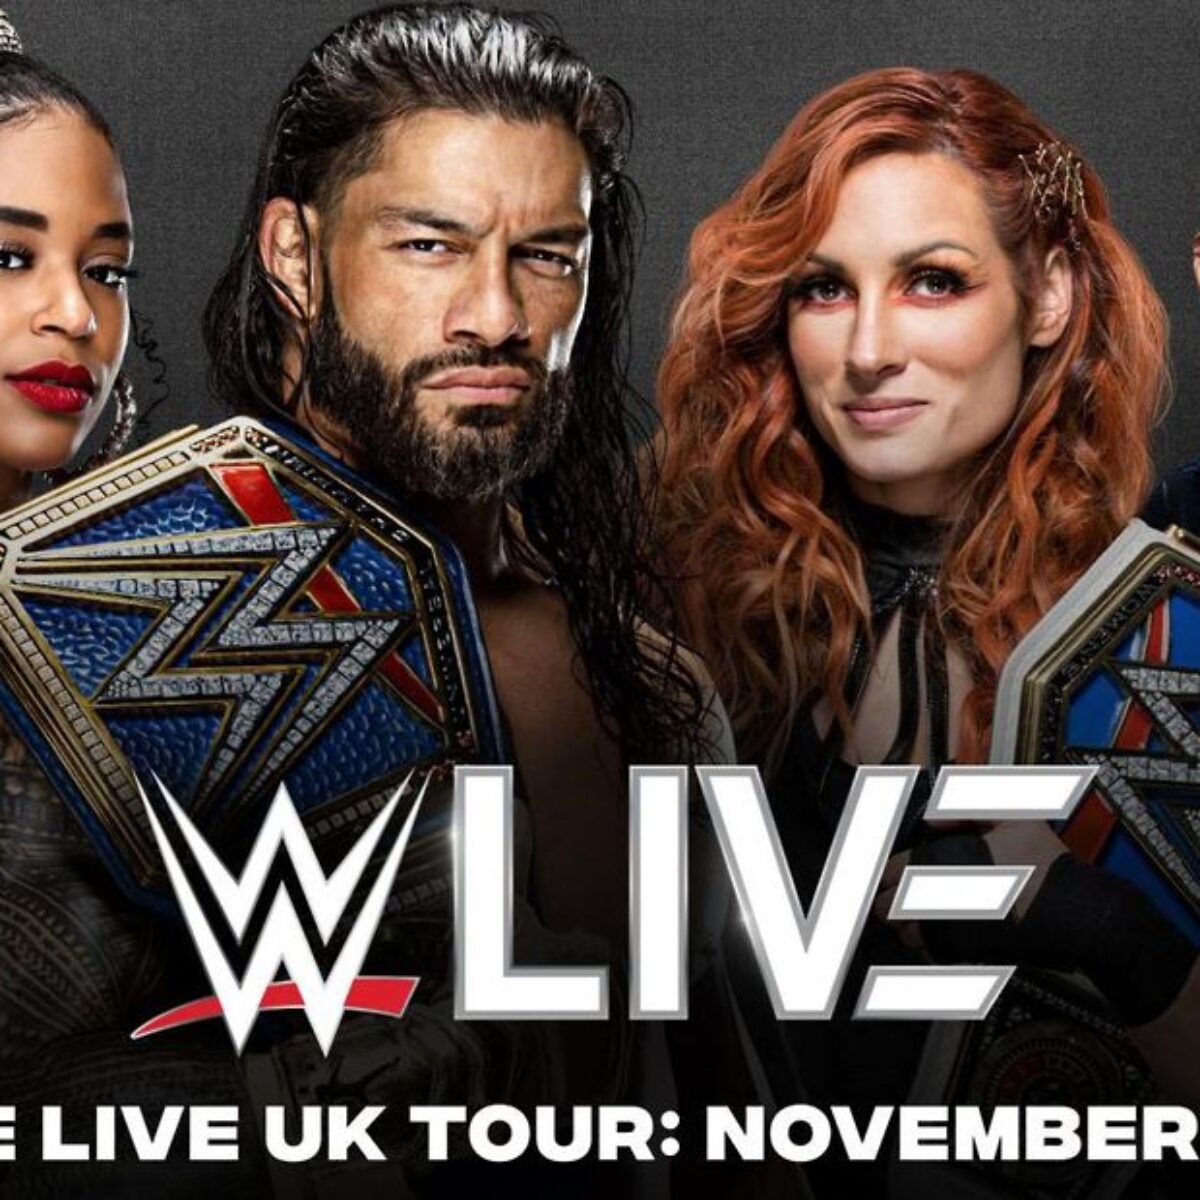 WWE WWE Wrestling Live UK Tour November 2017 Flyer 6"X8" Raw Smackdown Live 